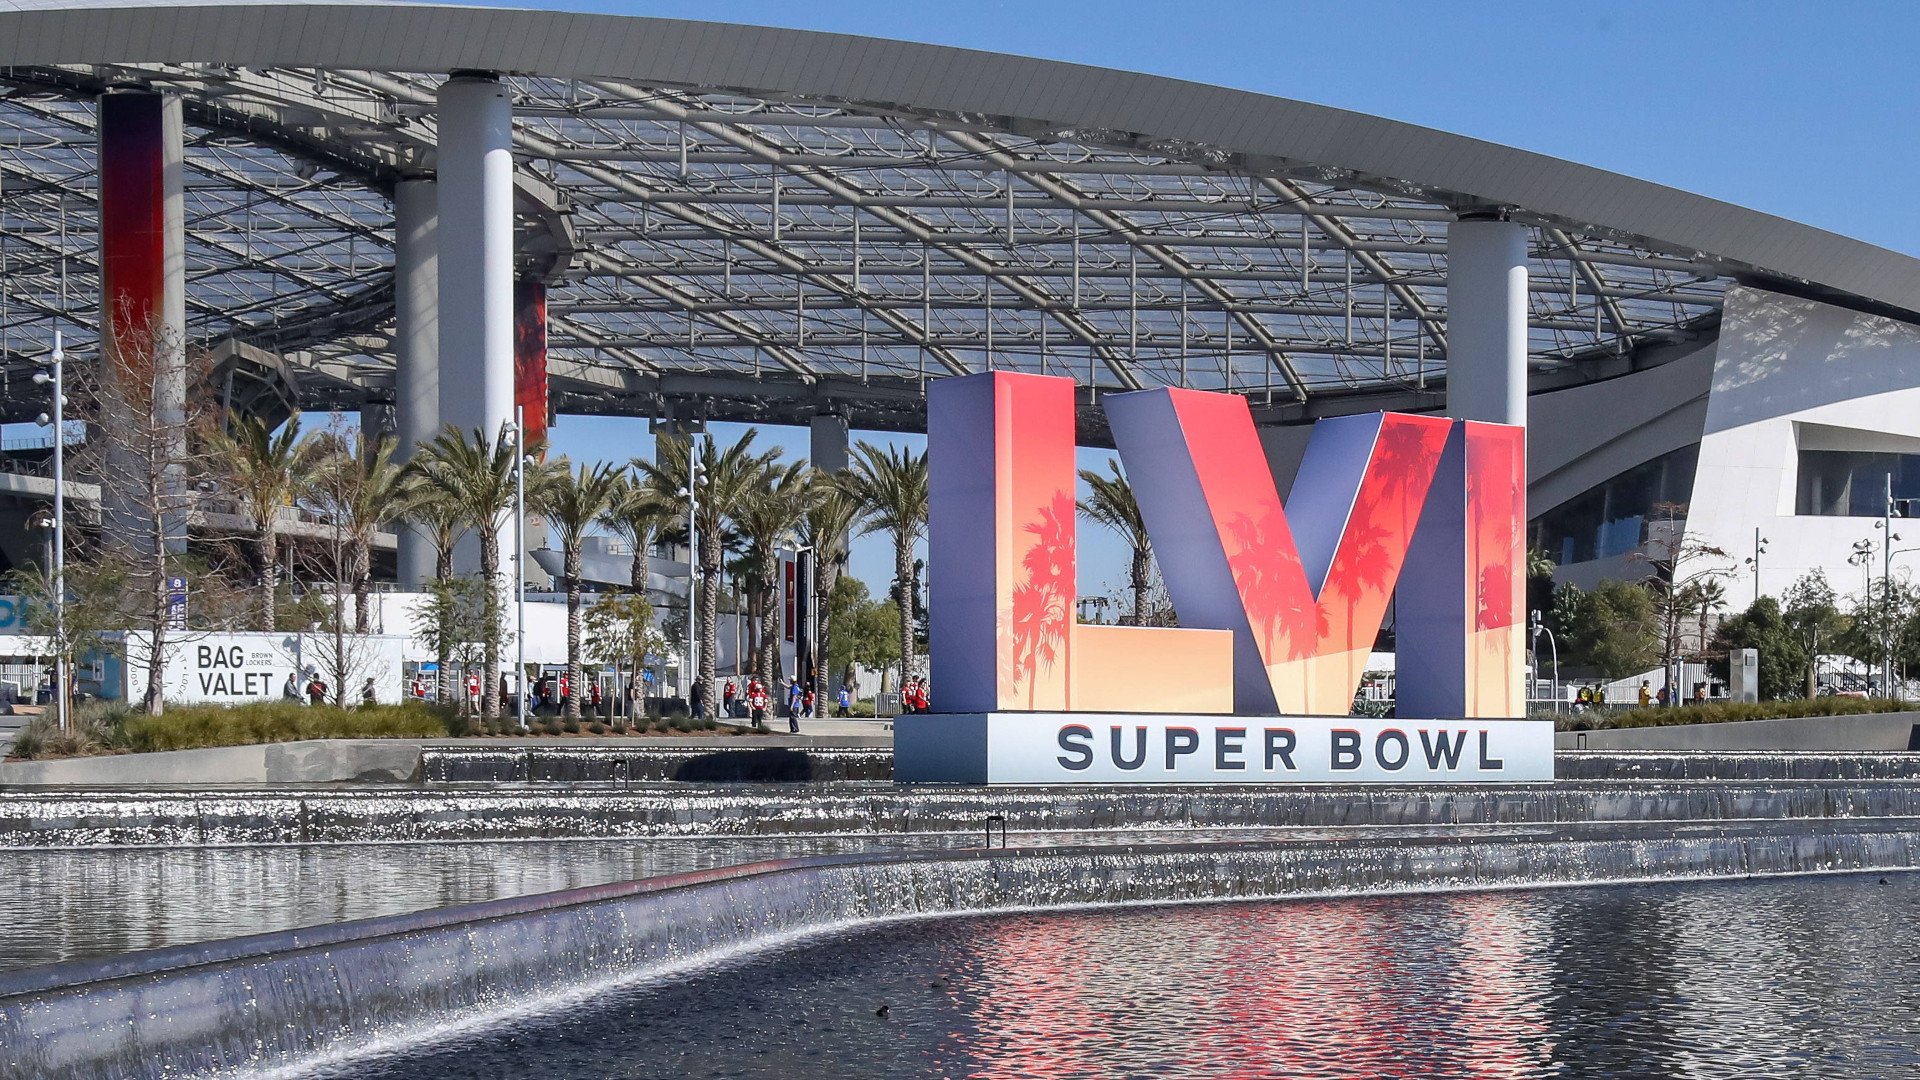 SoFi Stadium with the Super Bowl LVI logo